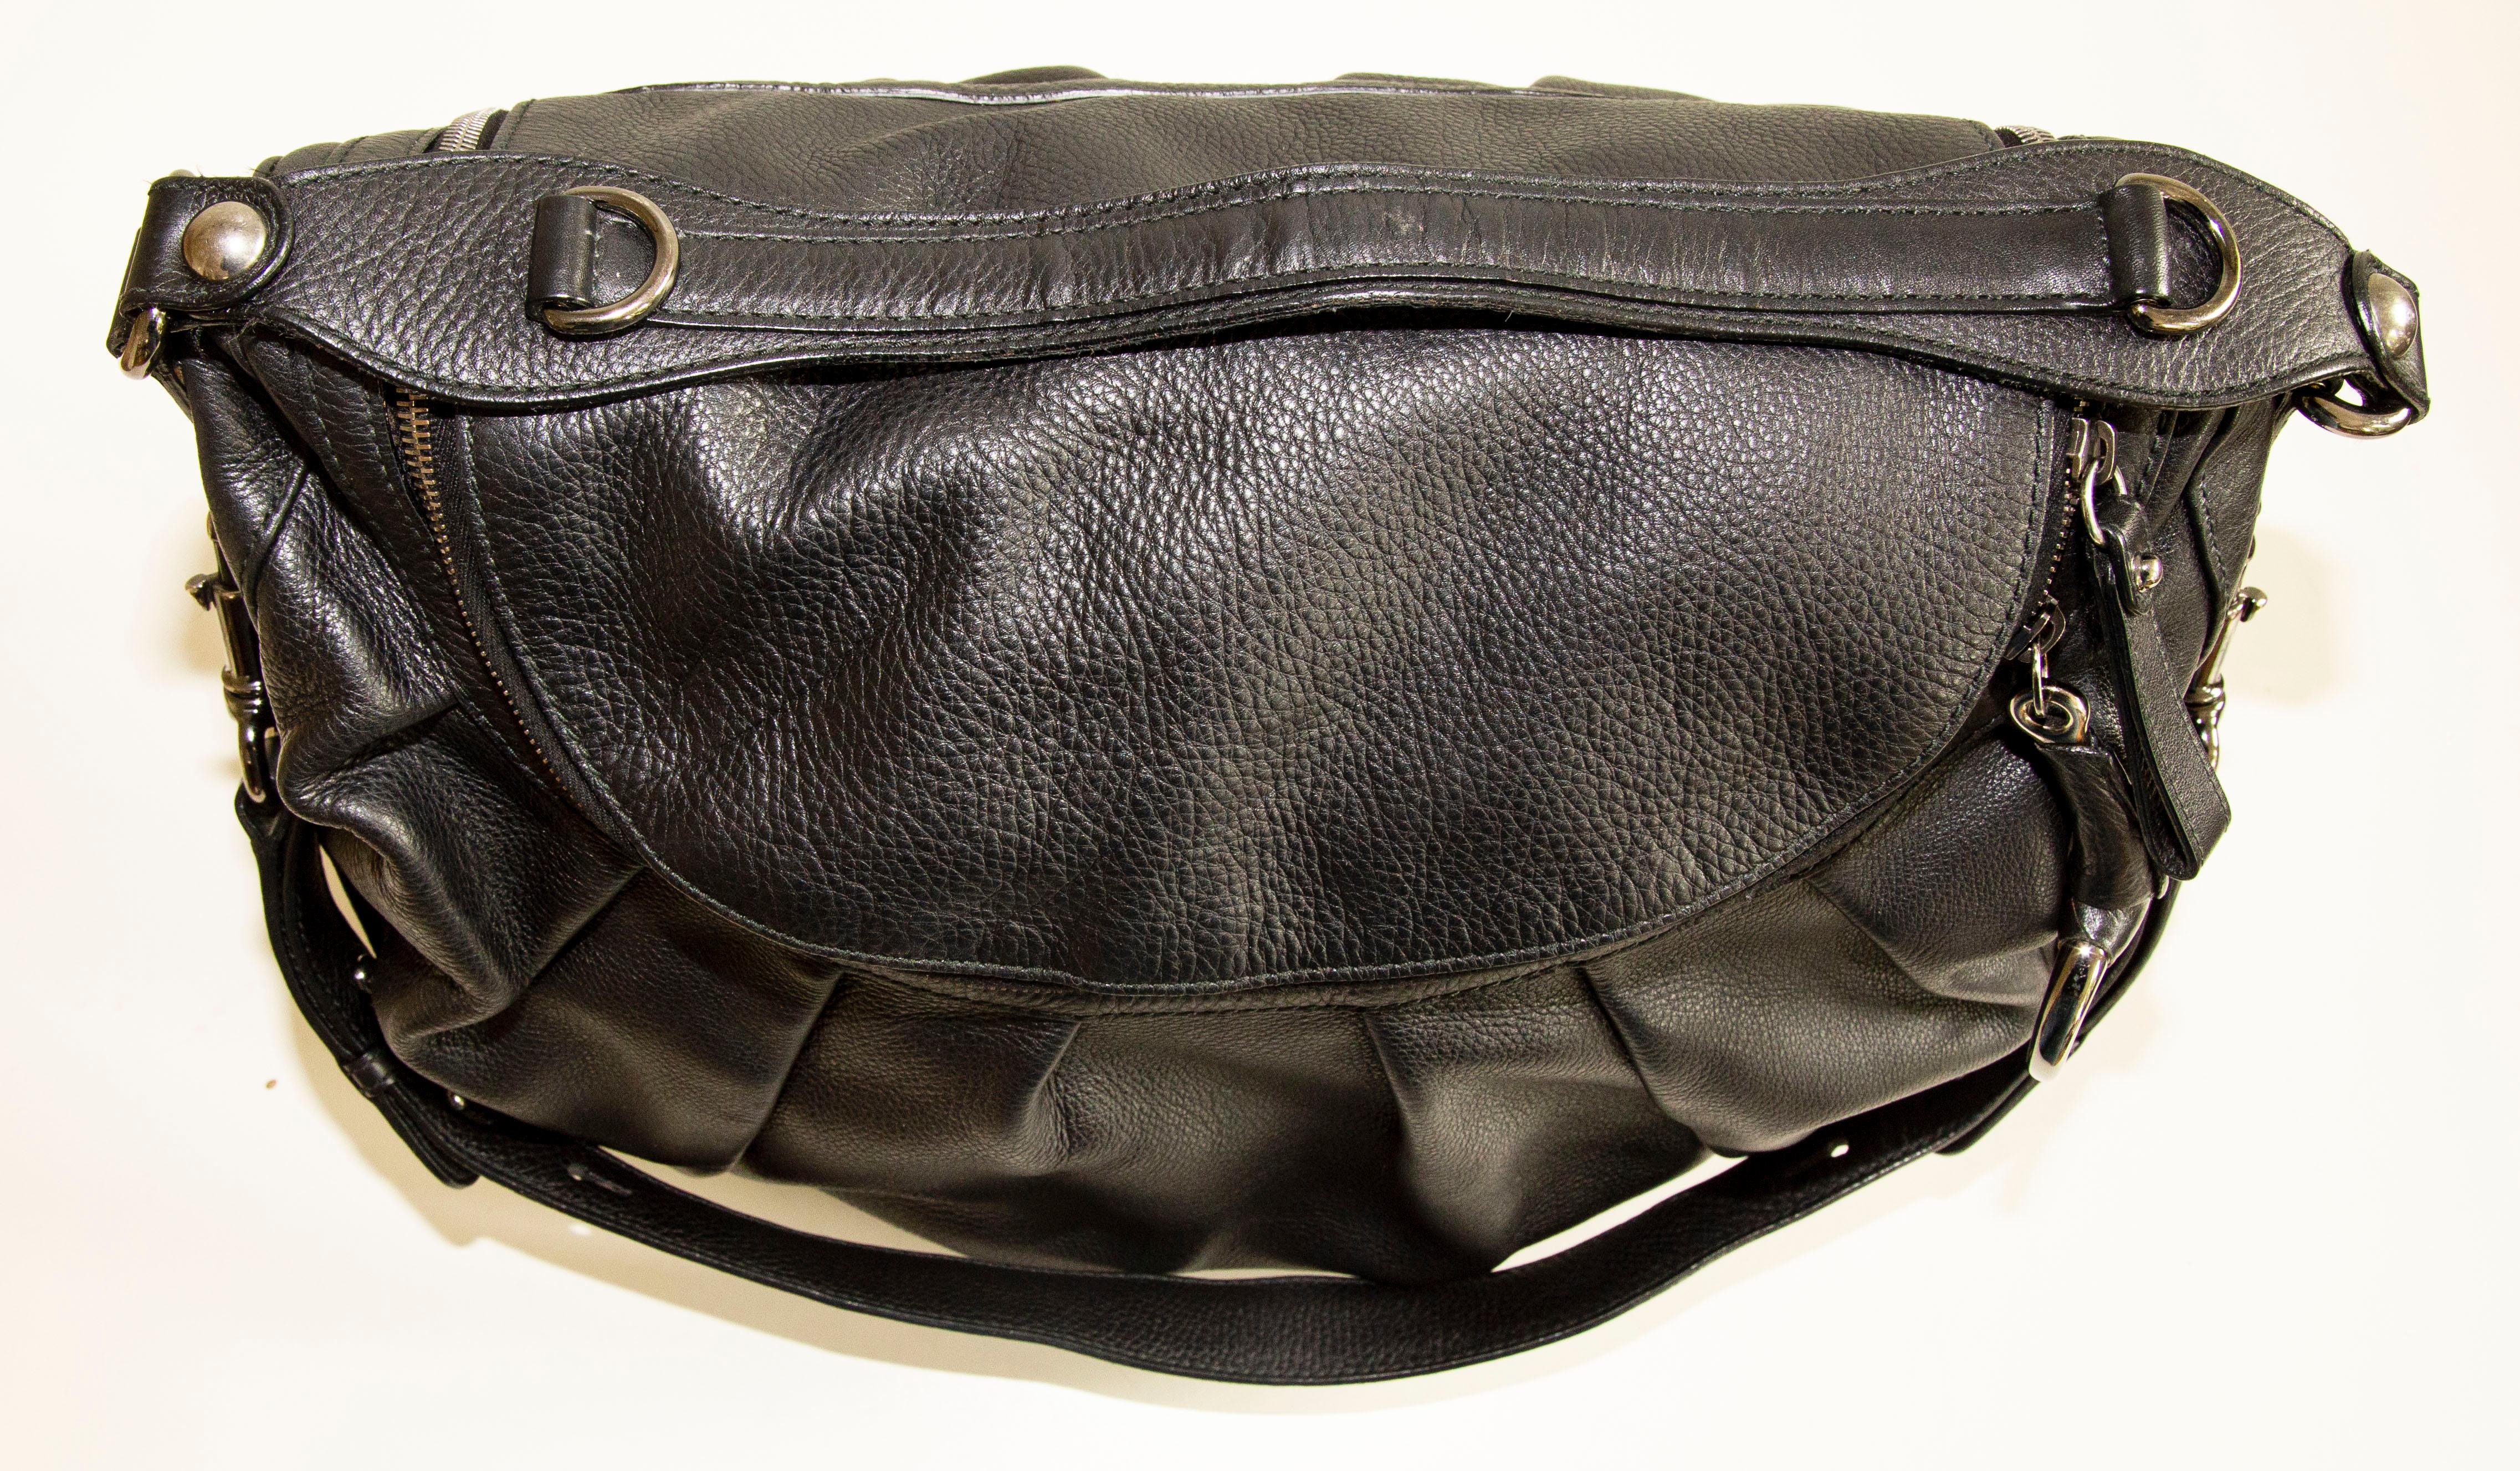 Gucci Icon Bit Medium Pebbled Leather Shoulder Bag in Black Leather For Sale 2